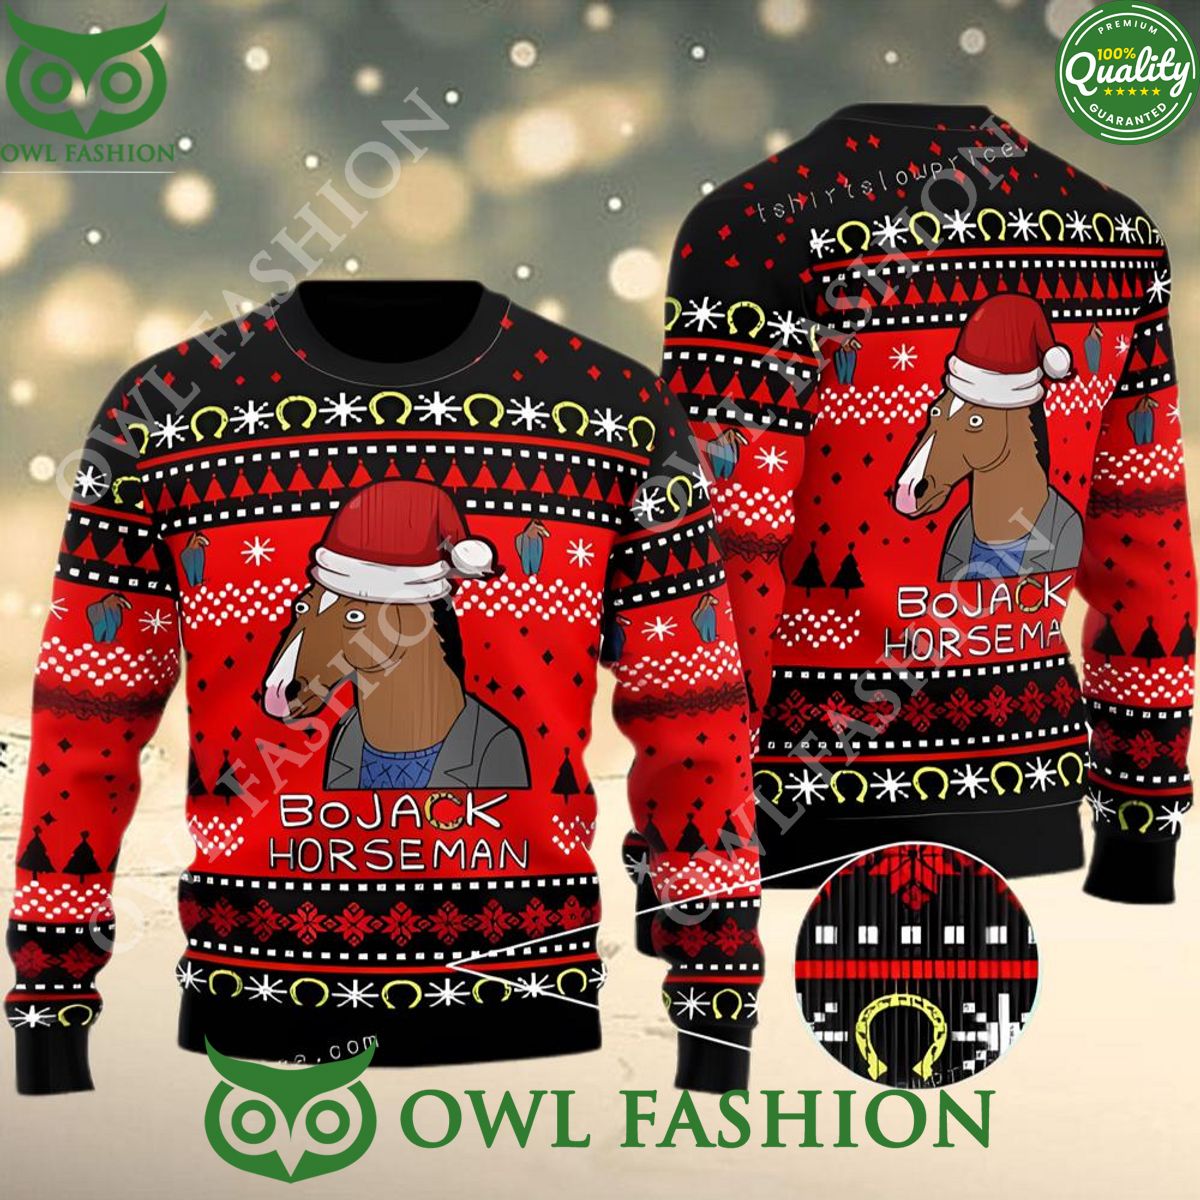 bojack horseman comedy ugly christmas sweater jumper 1 eyWMW.jpg